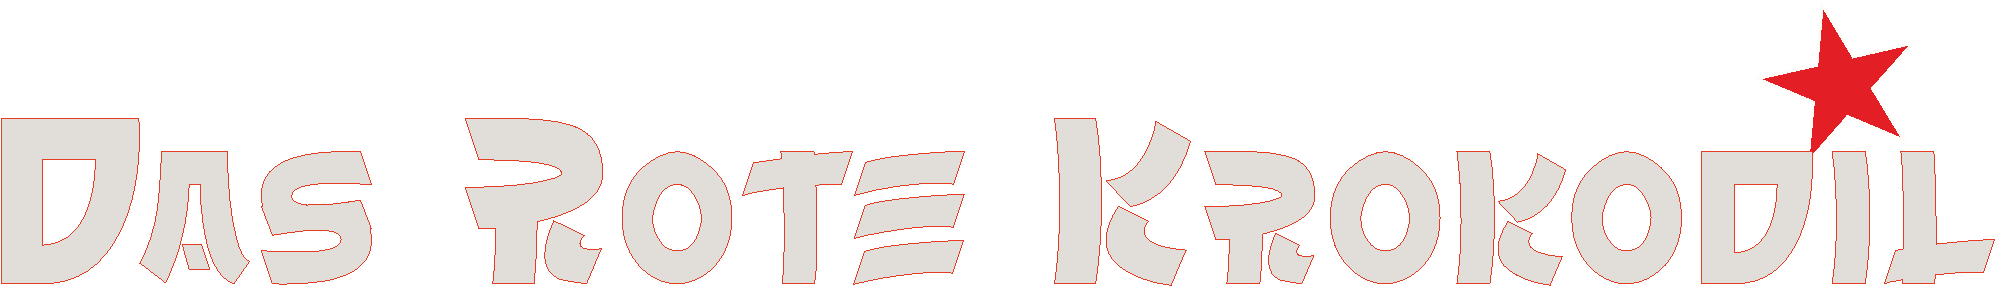 Logokroko